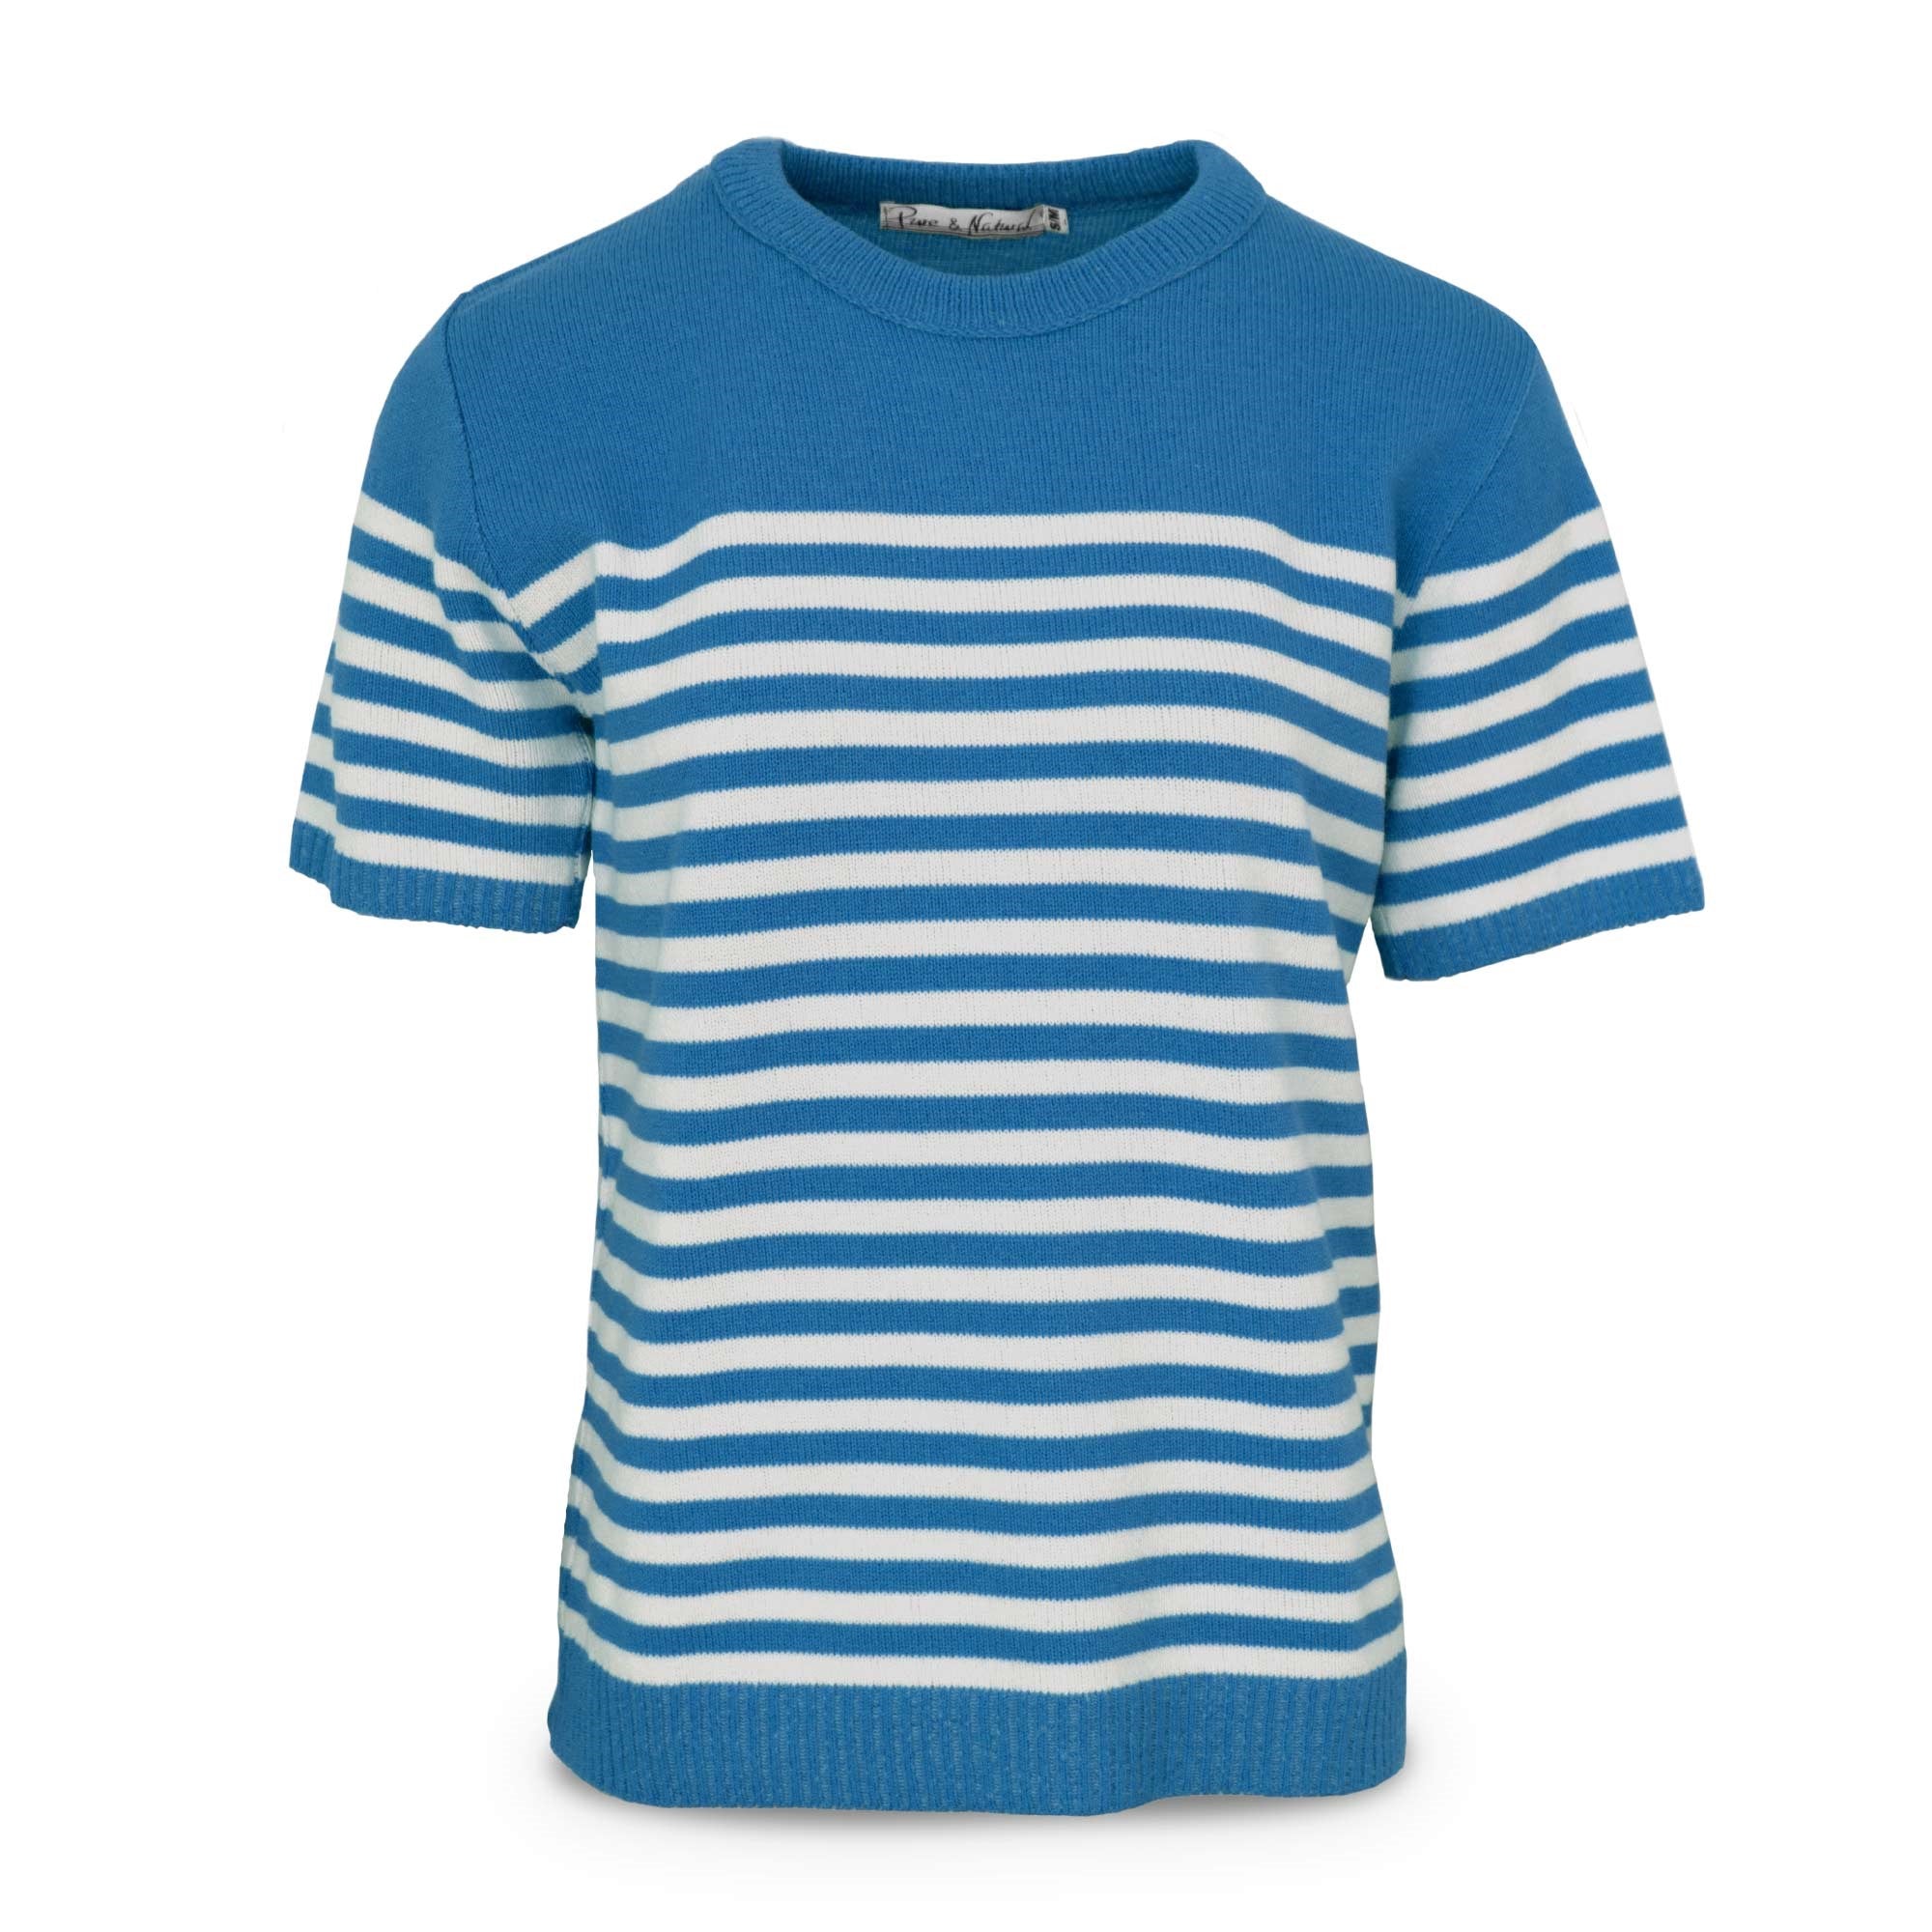 Ladies Stripe Sweater - Blue - M/L - TJ Hughes